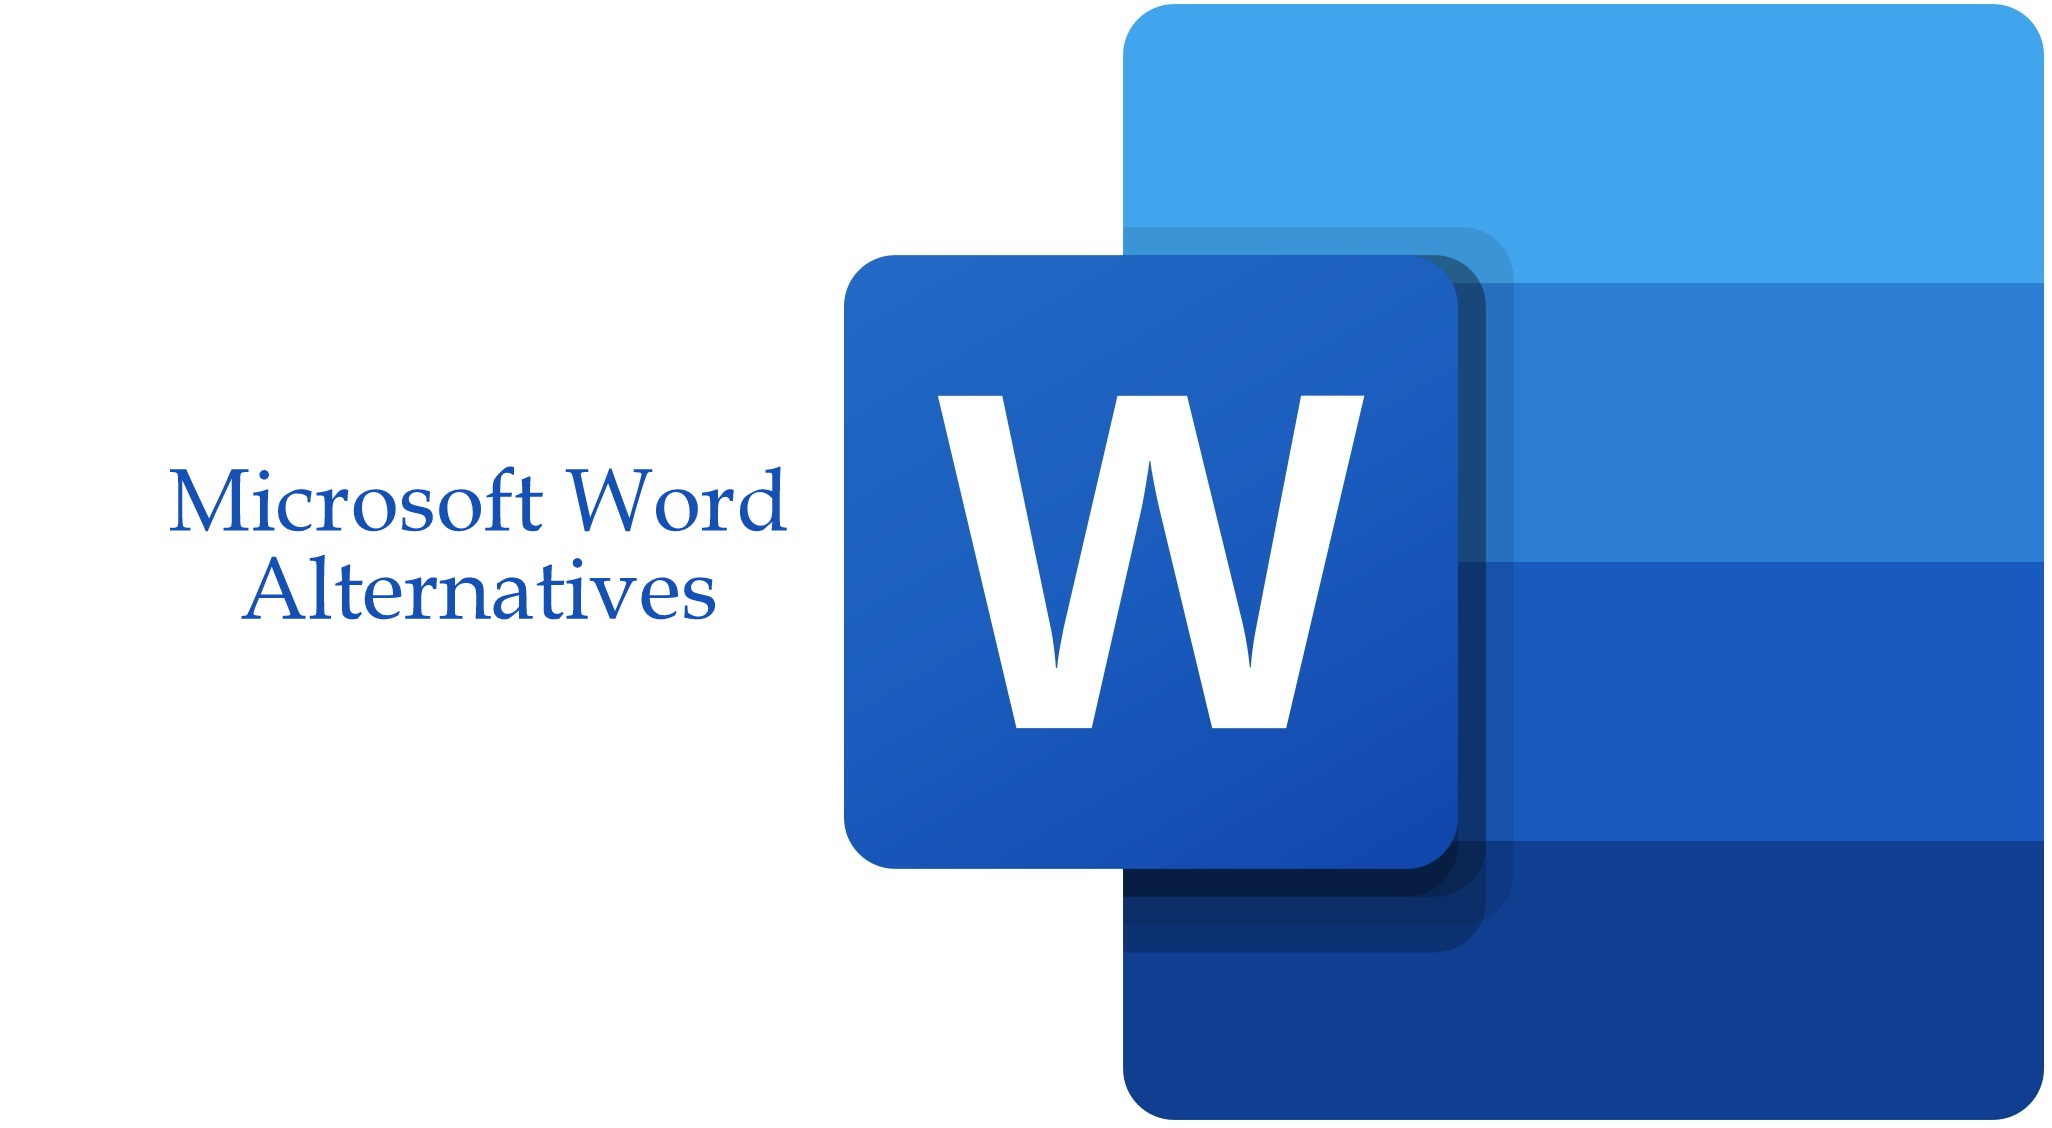 Microsoft Word alternatiba onenak 2020an
